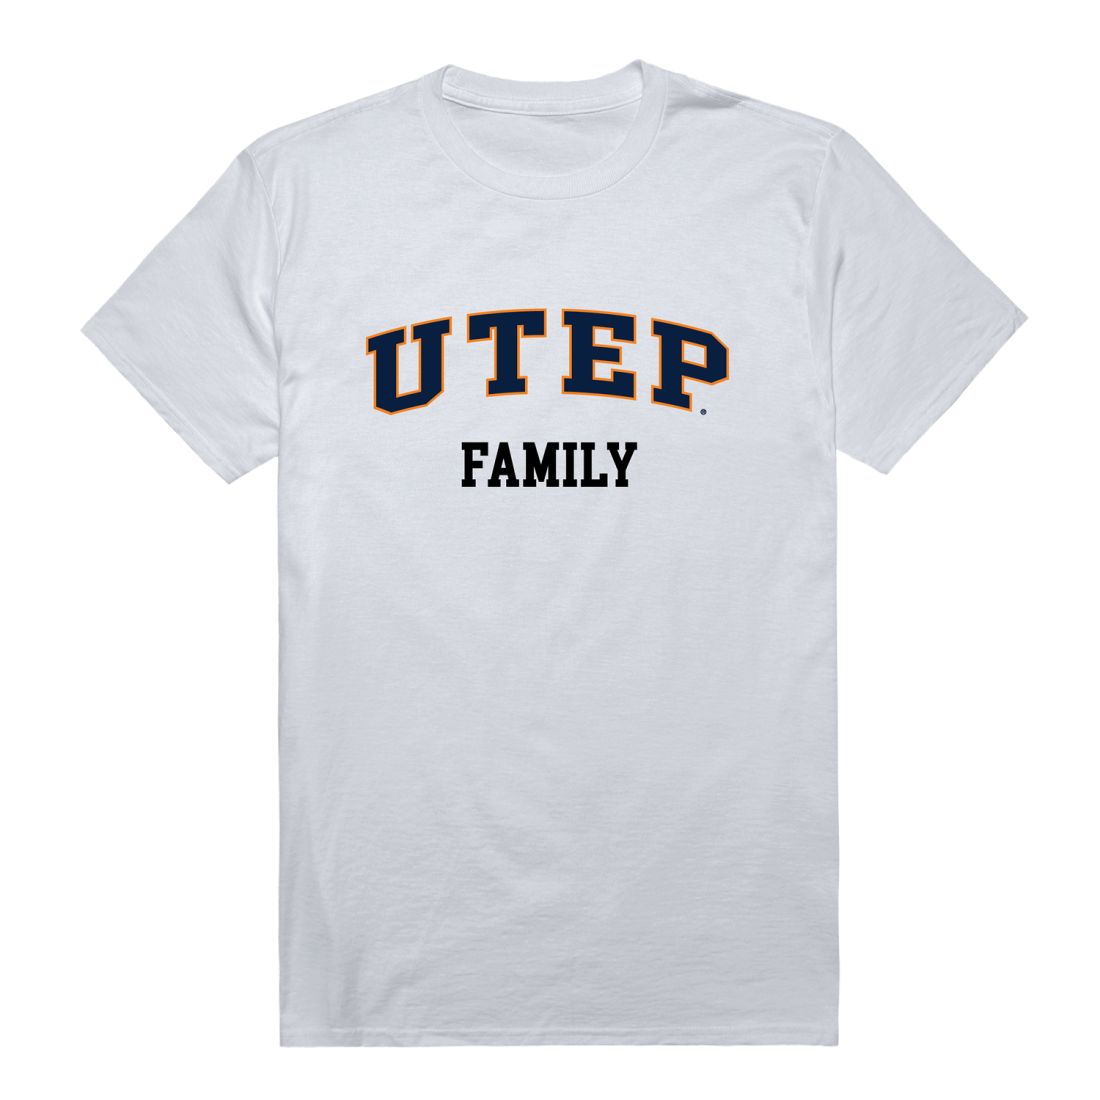 UTEP University of Texas at El Paso Miners Family T-Shirt